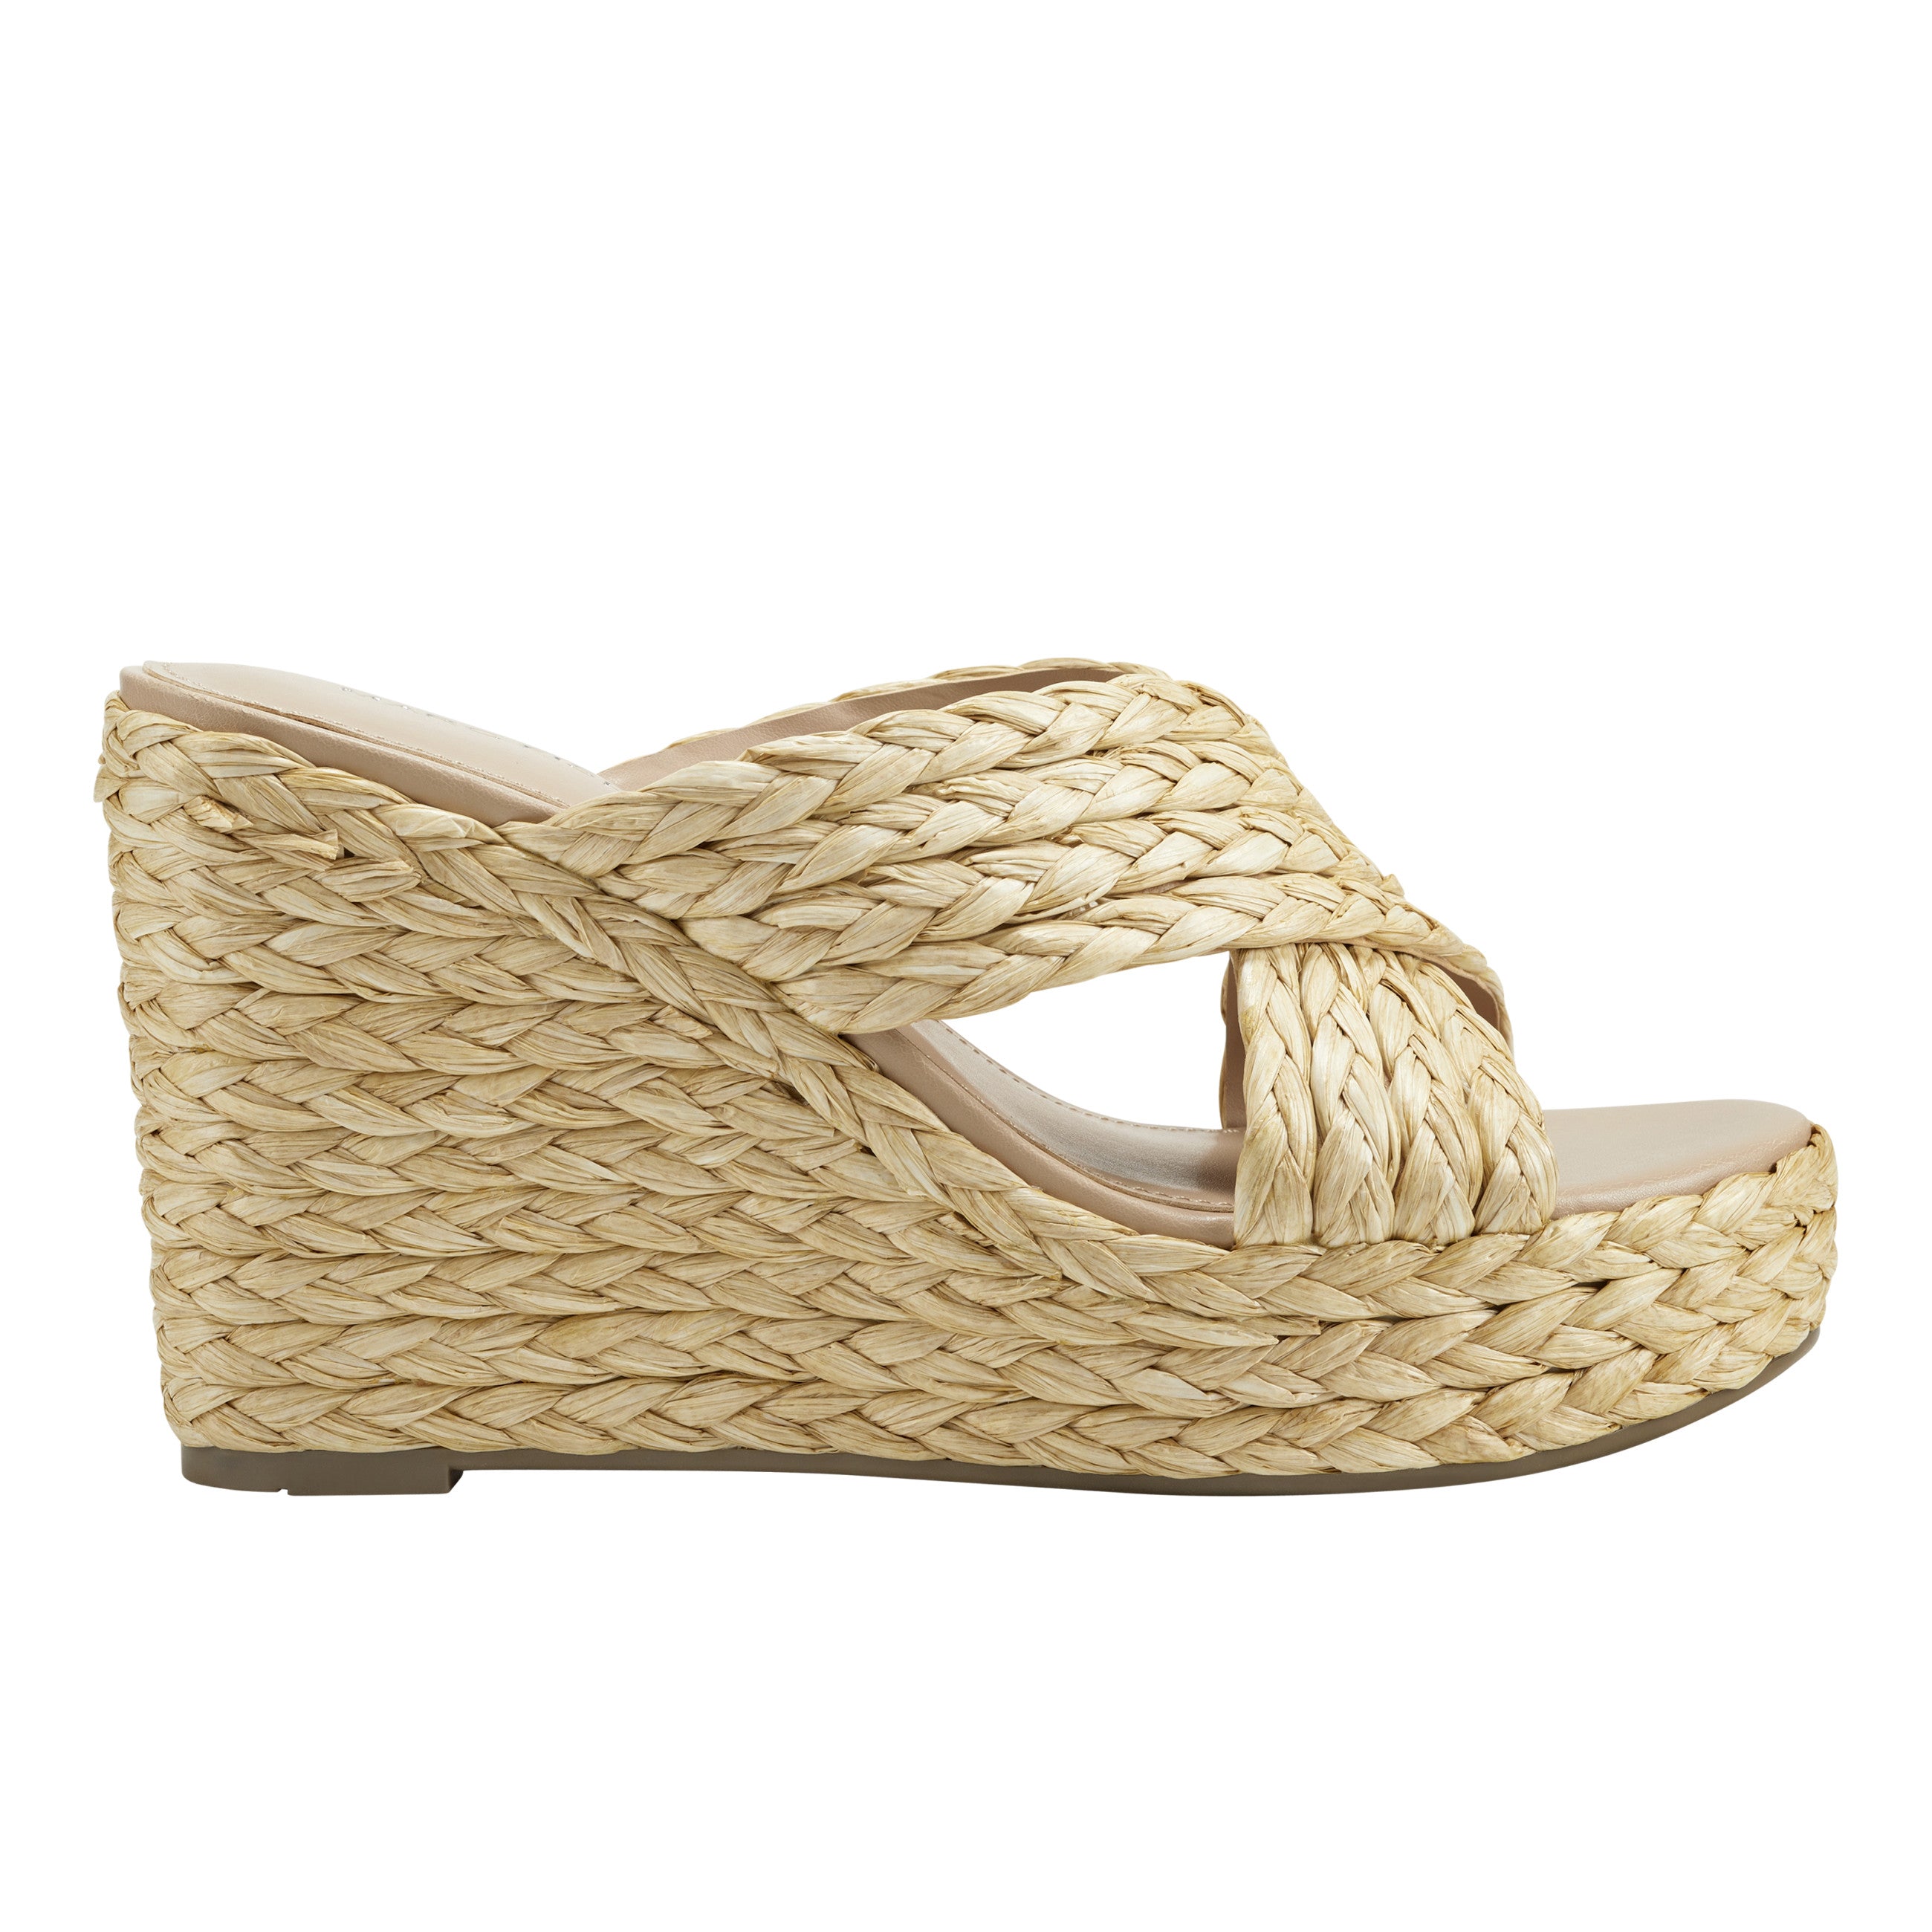 summer 1 Pair cute summer sandals Imitation Woven Straw Slippers Simple  Beach | eBay